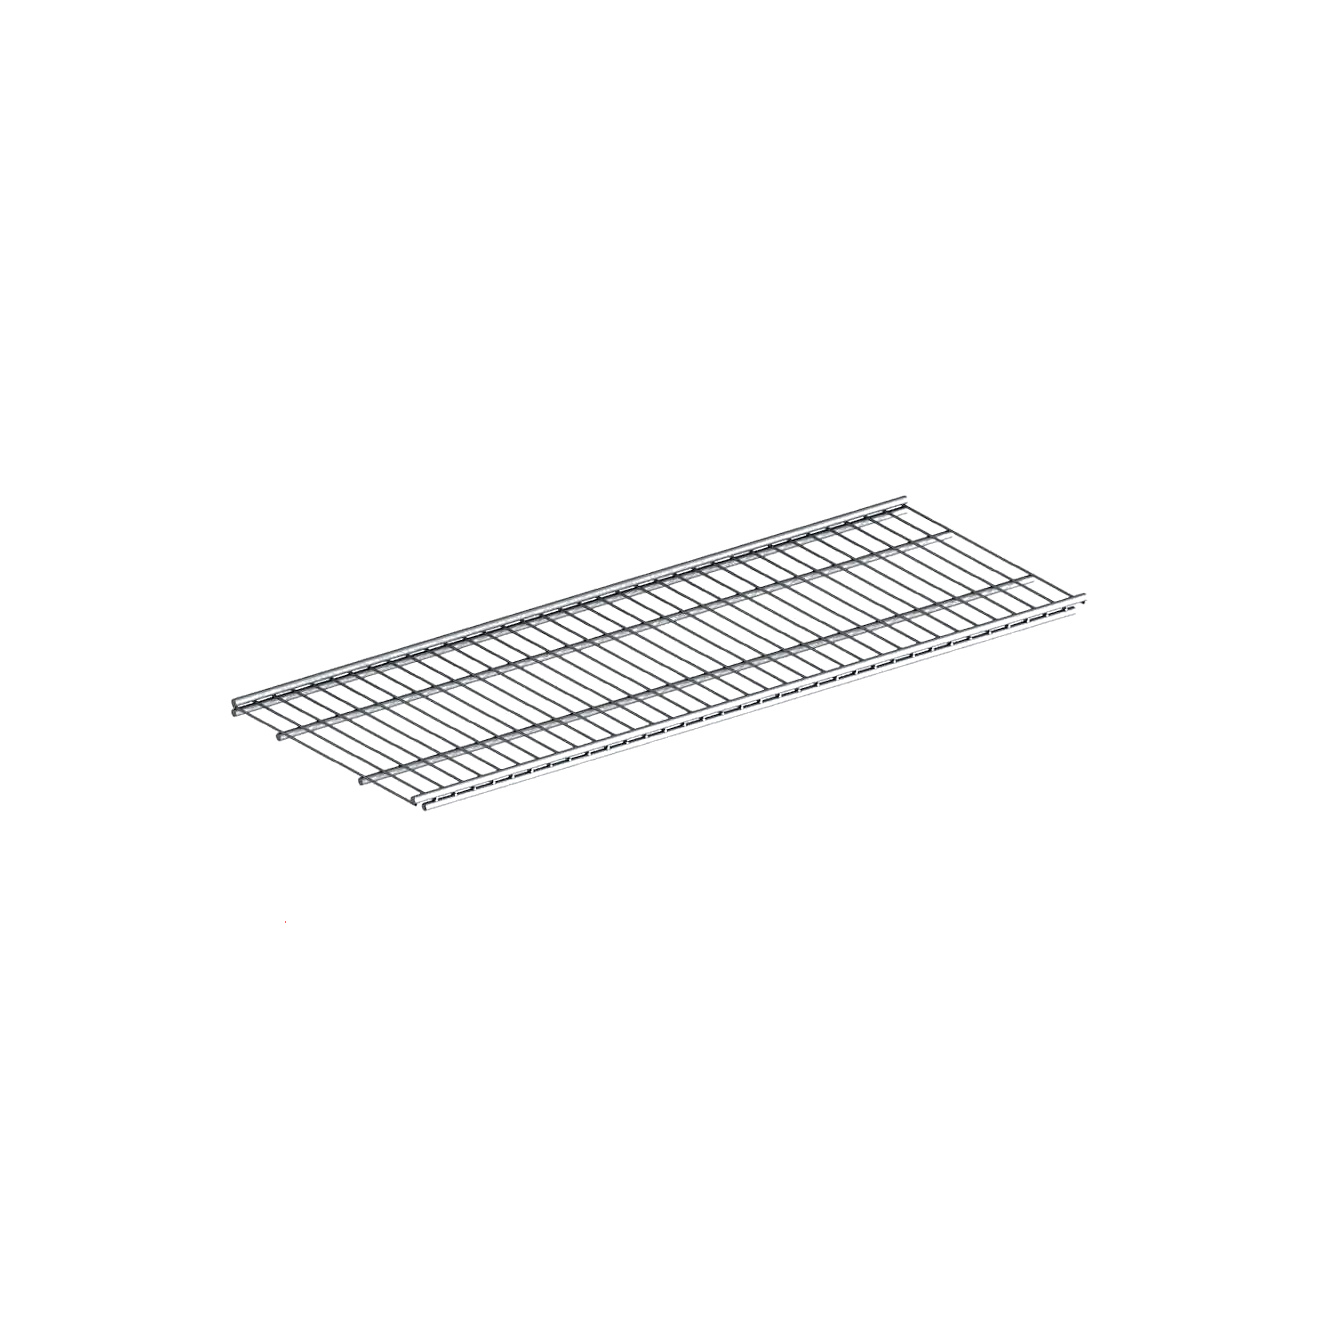 Sovella grid shelf 900x300mm, white - Storit